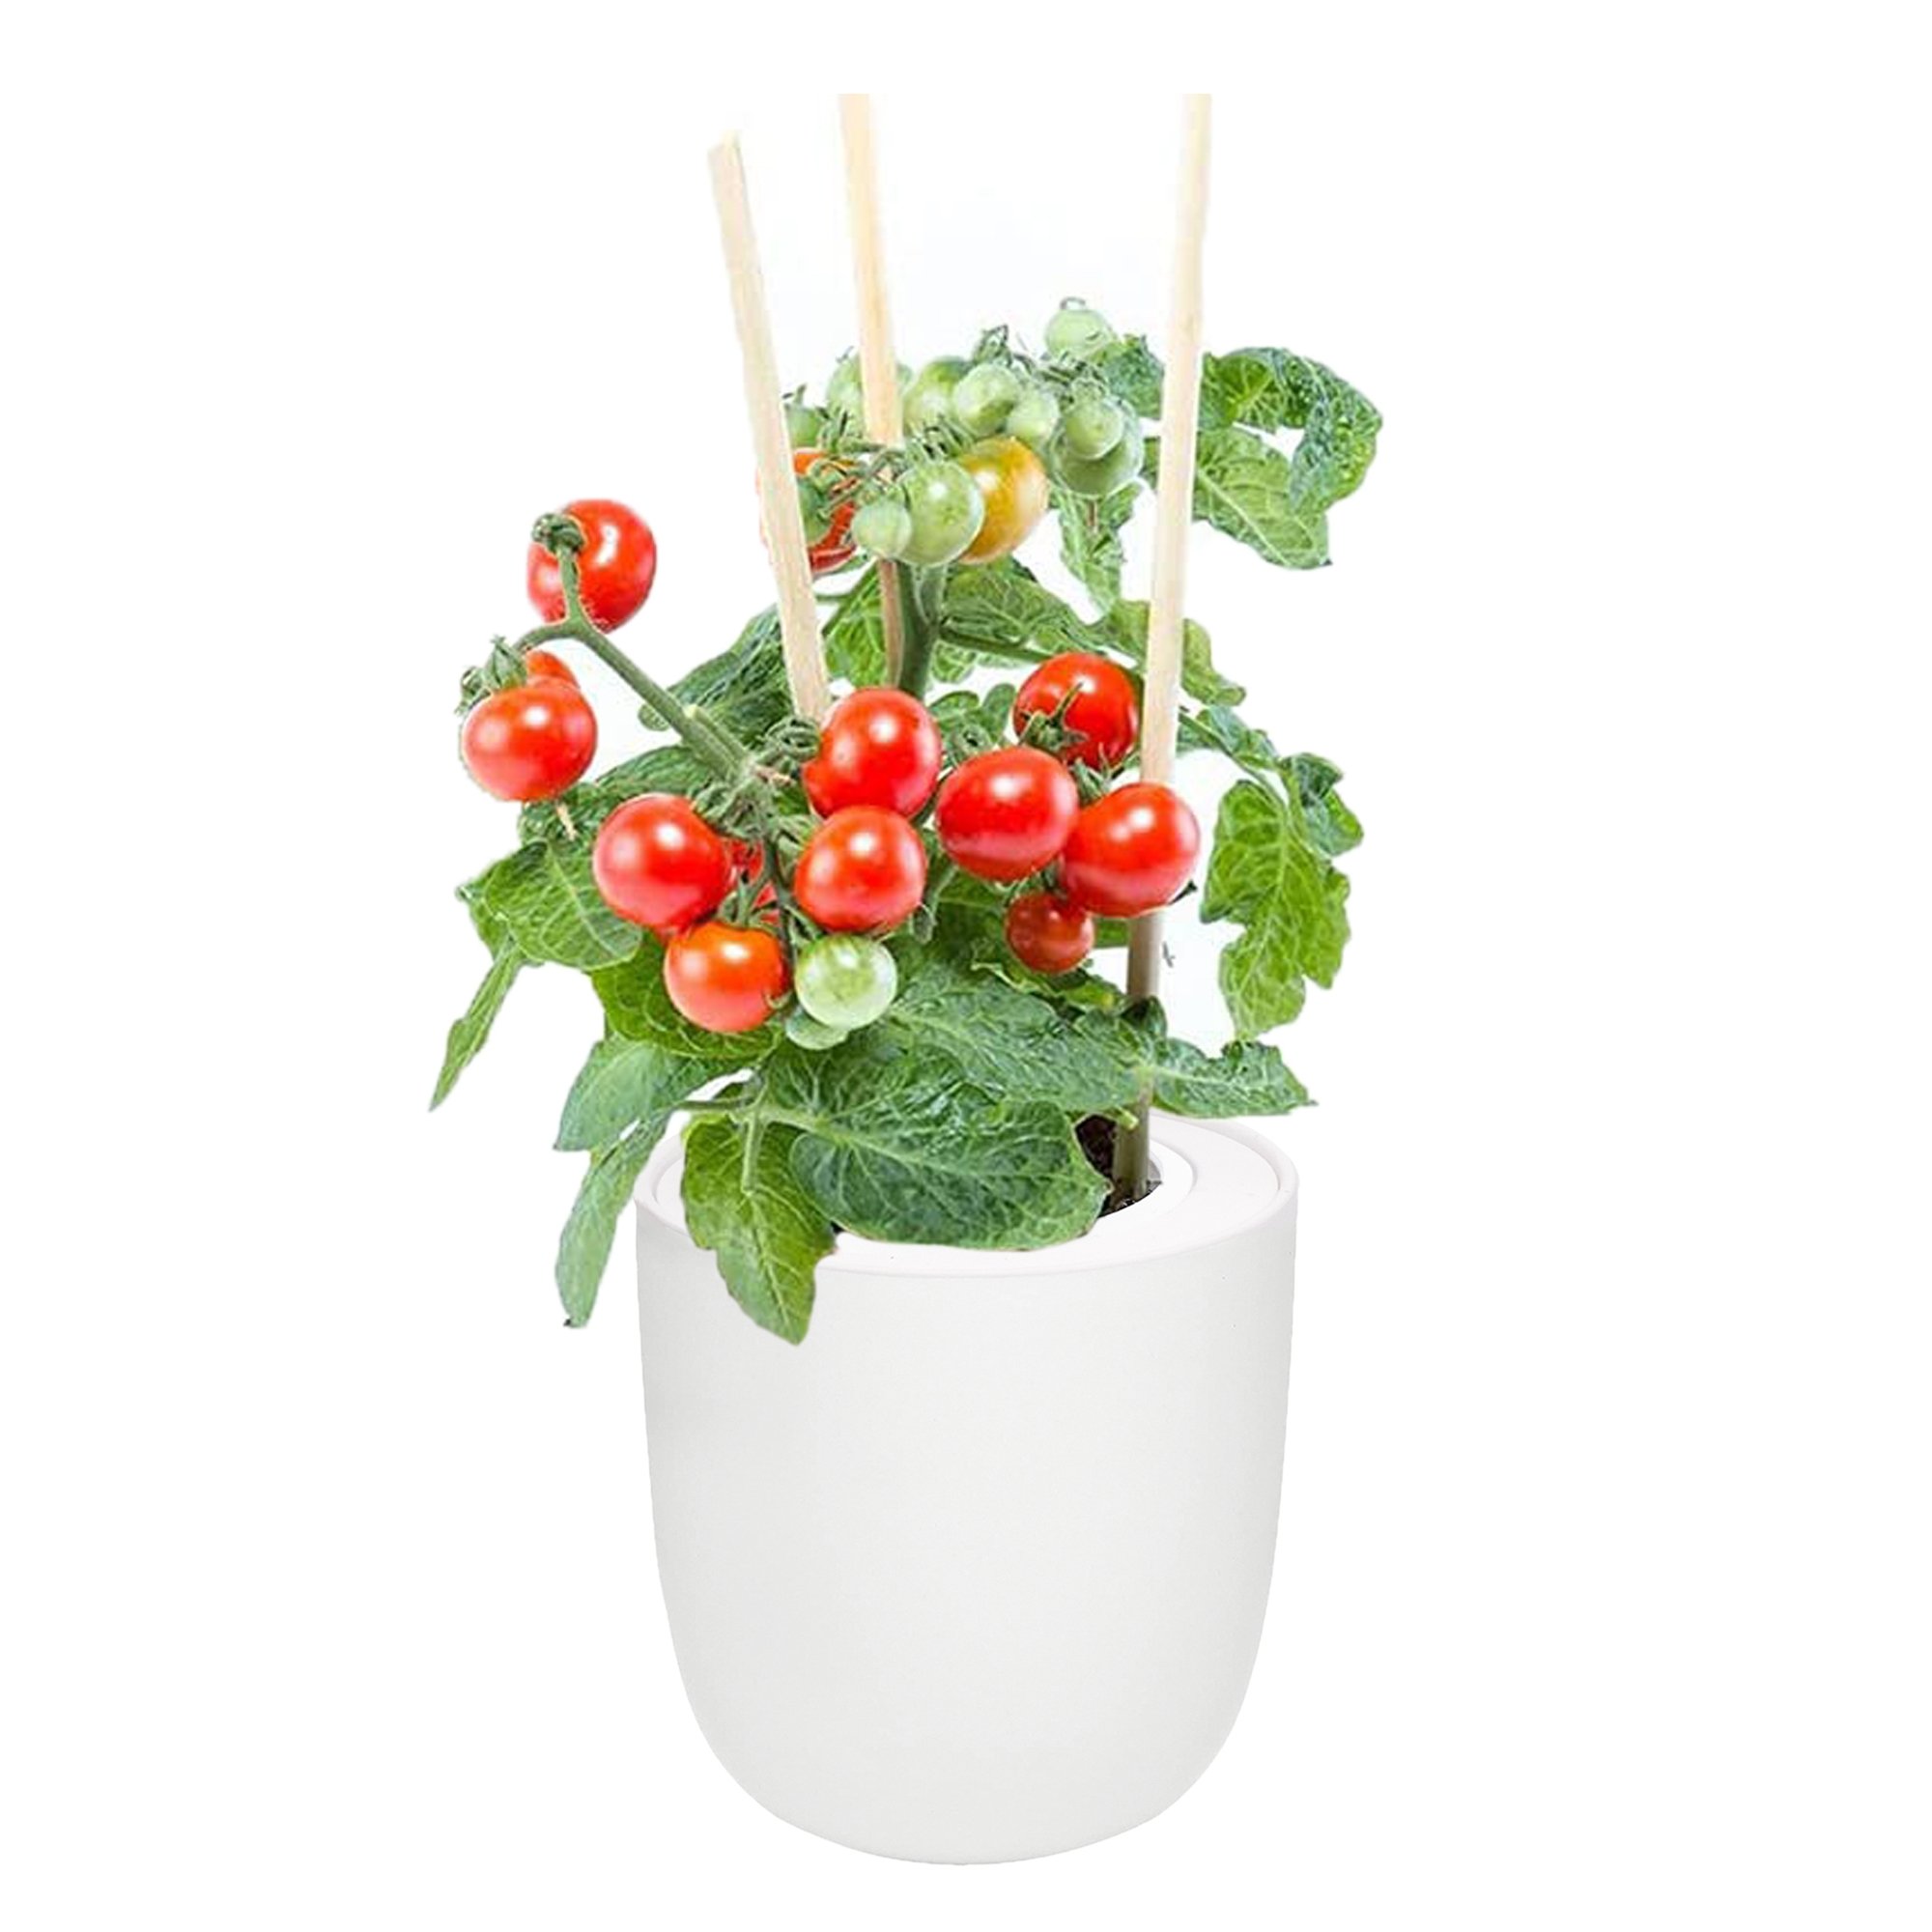 Cherry Tomato - Tiny Tim White Ceramic Pot Hydroponic Growing Kit with Seeds